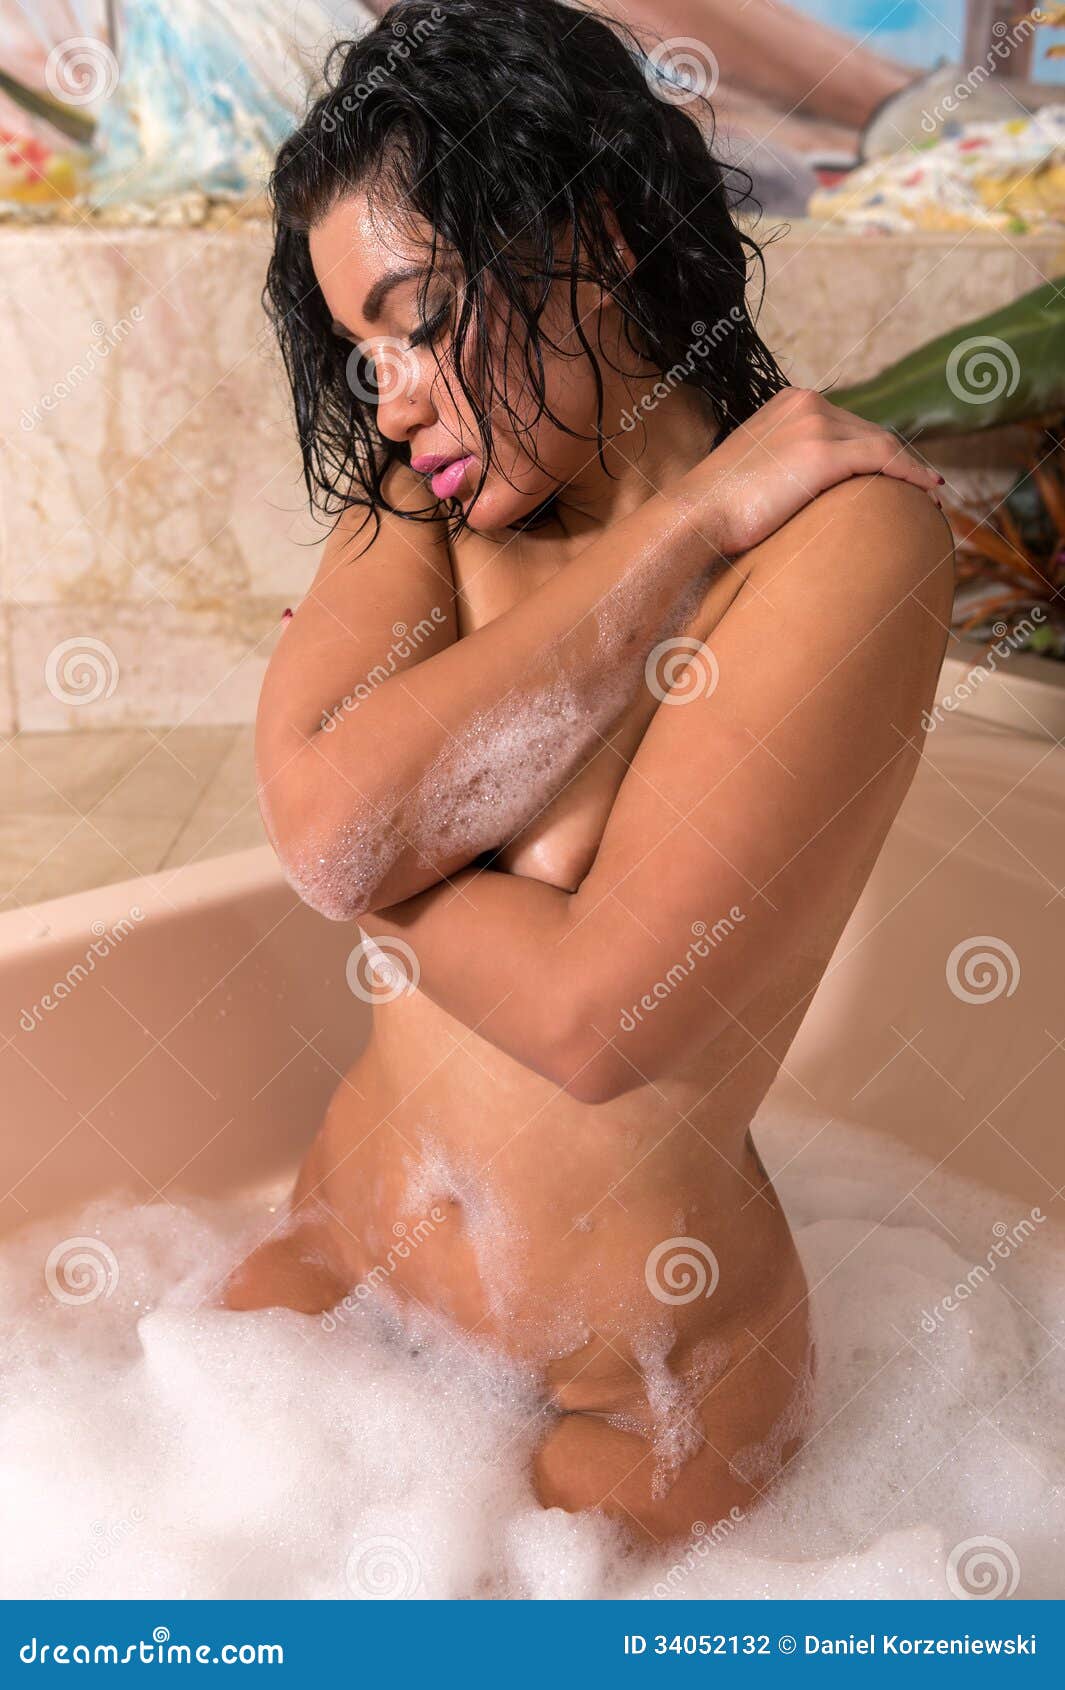 david wilsey add photo women in bath naked